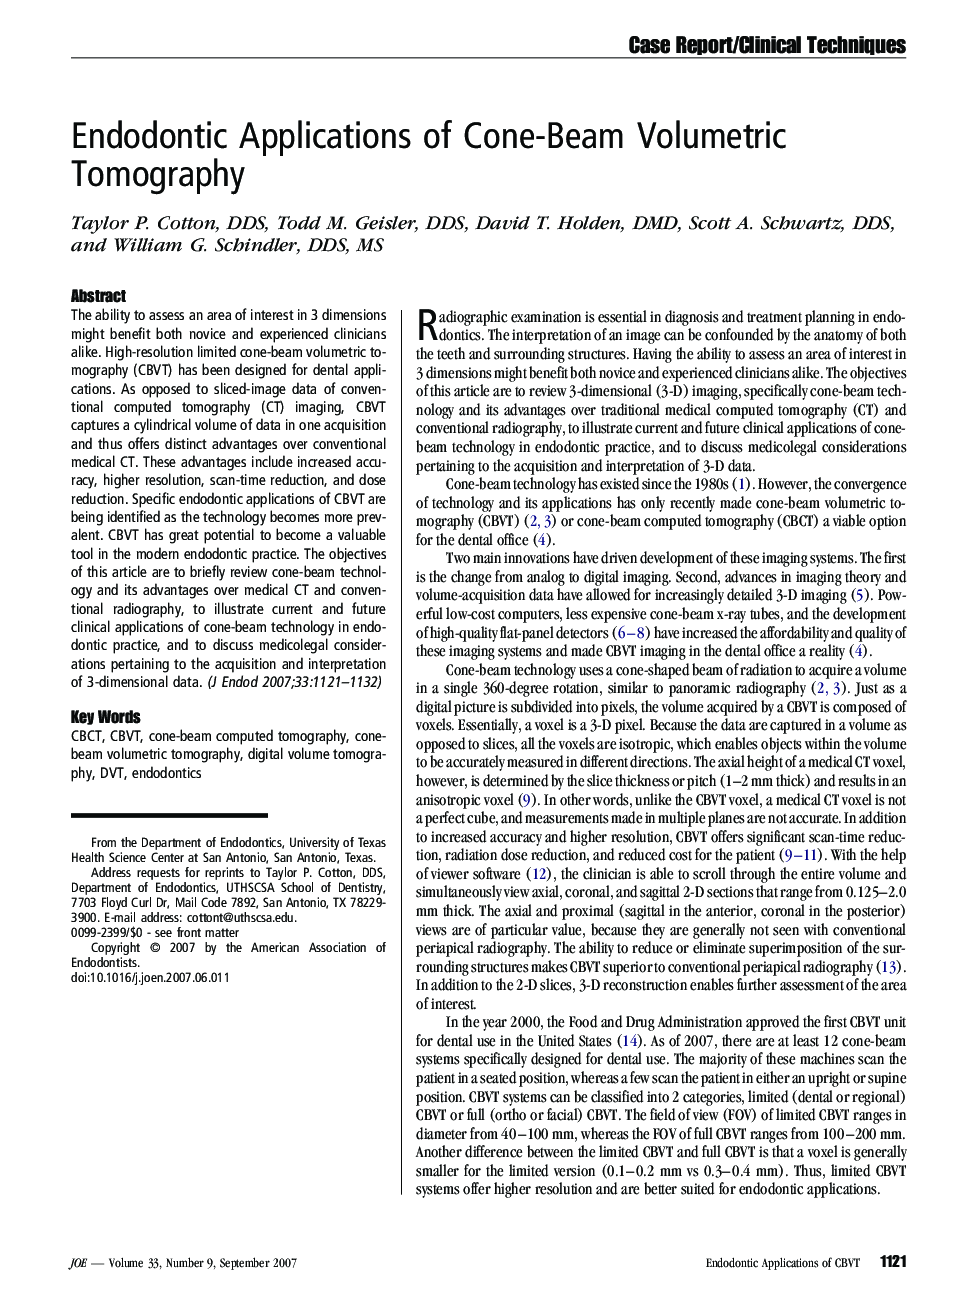 Endodontic Applications of Cone-Beam Volumetric Tomography